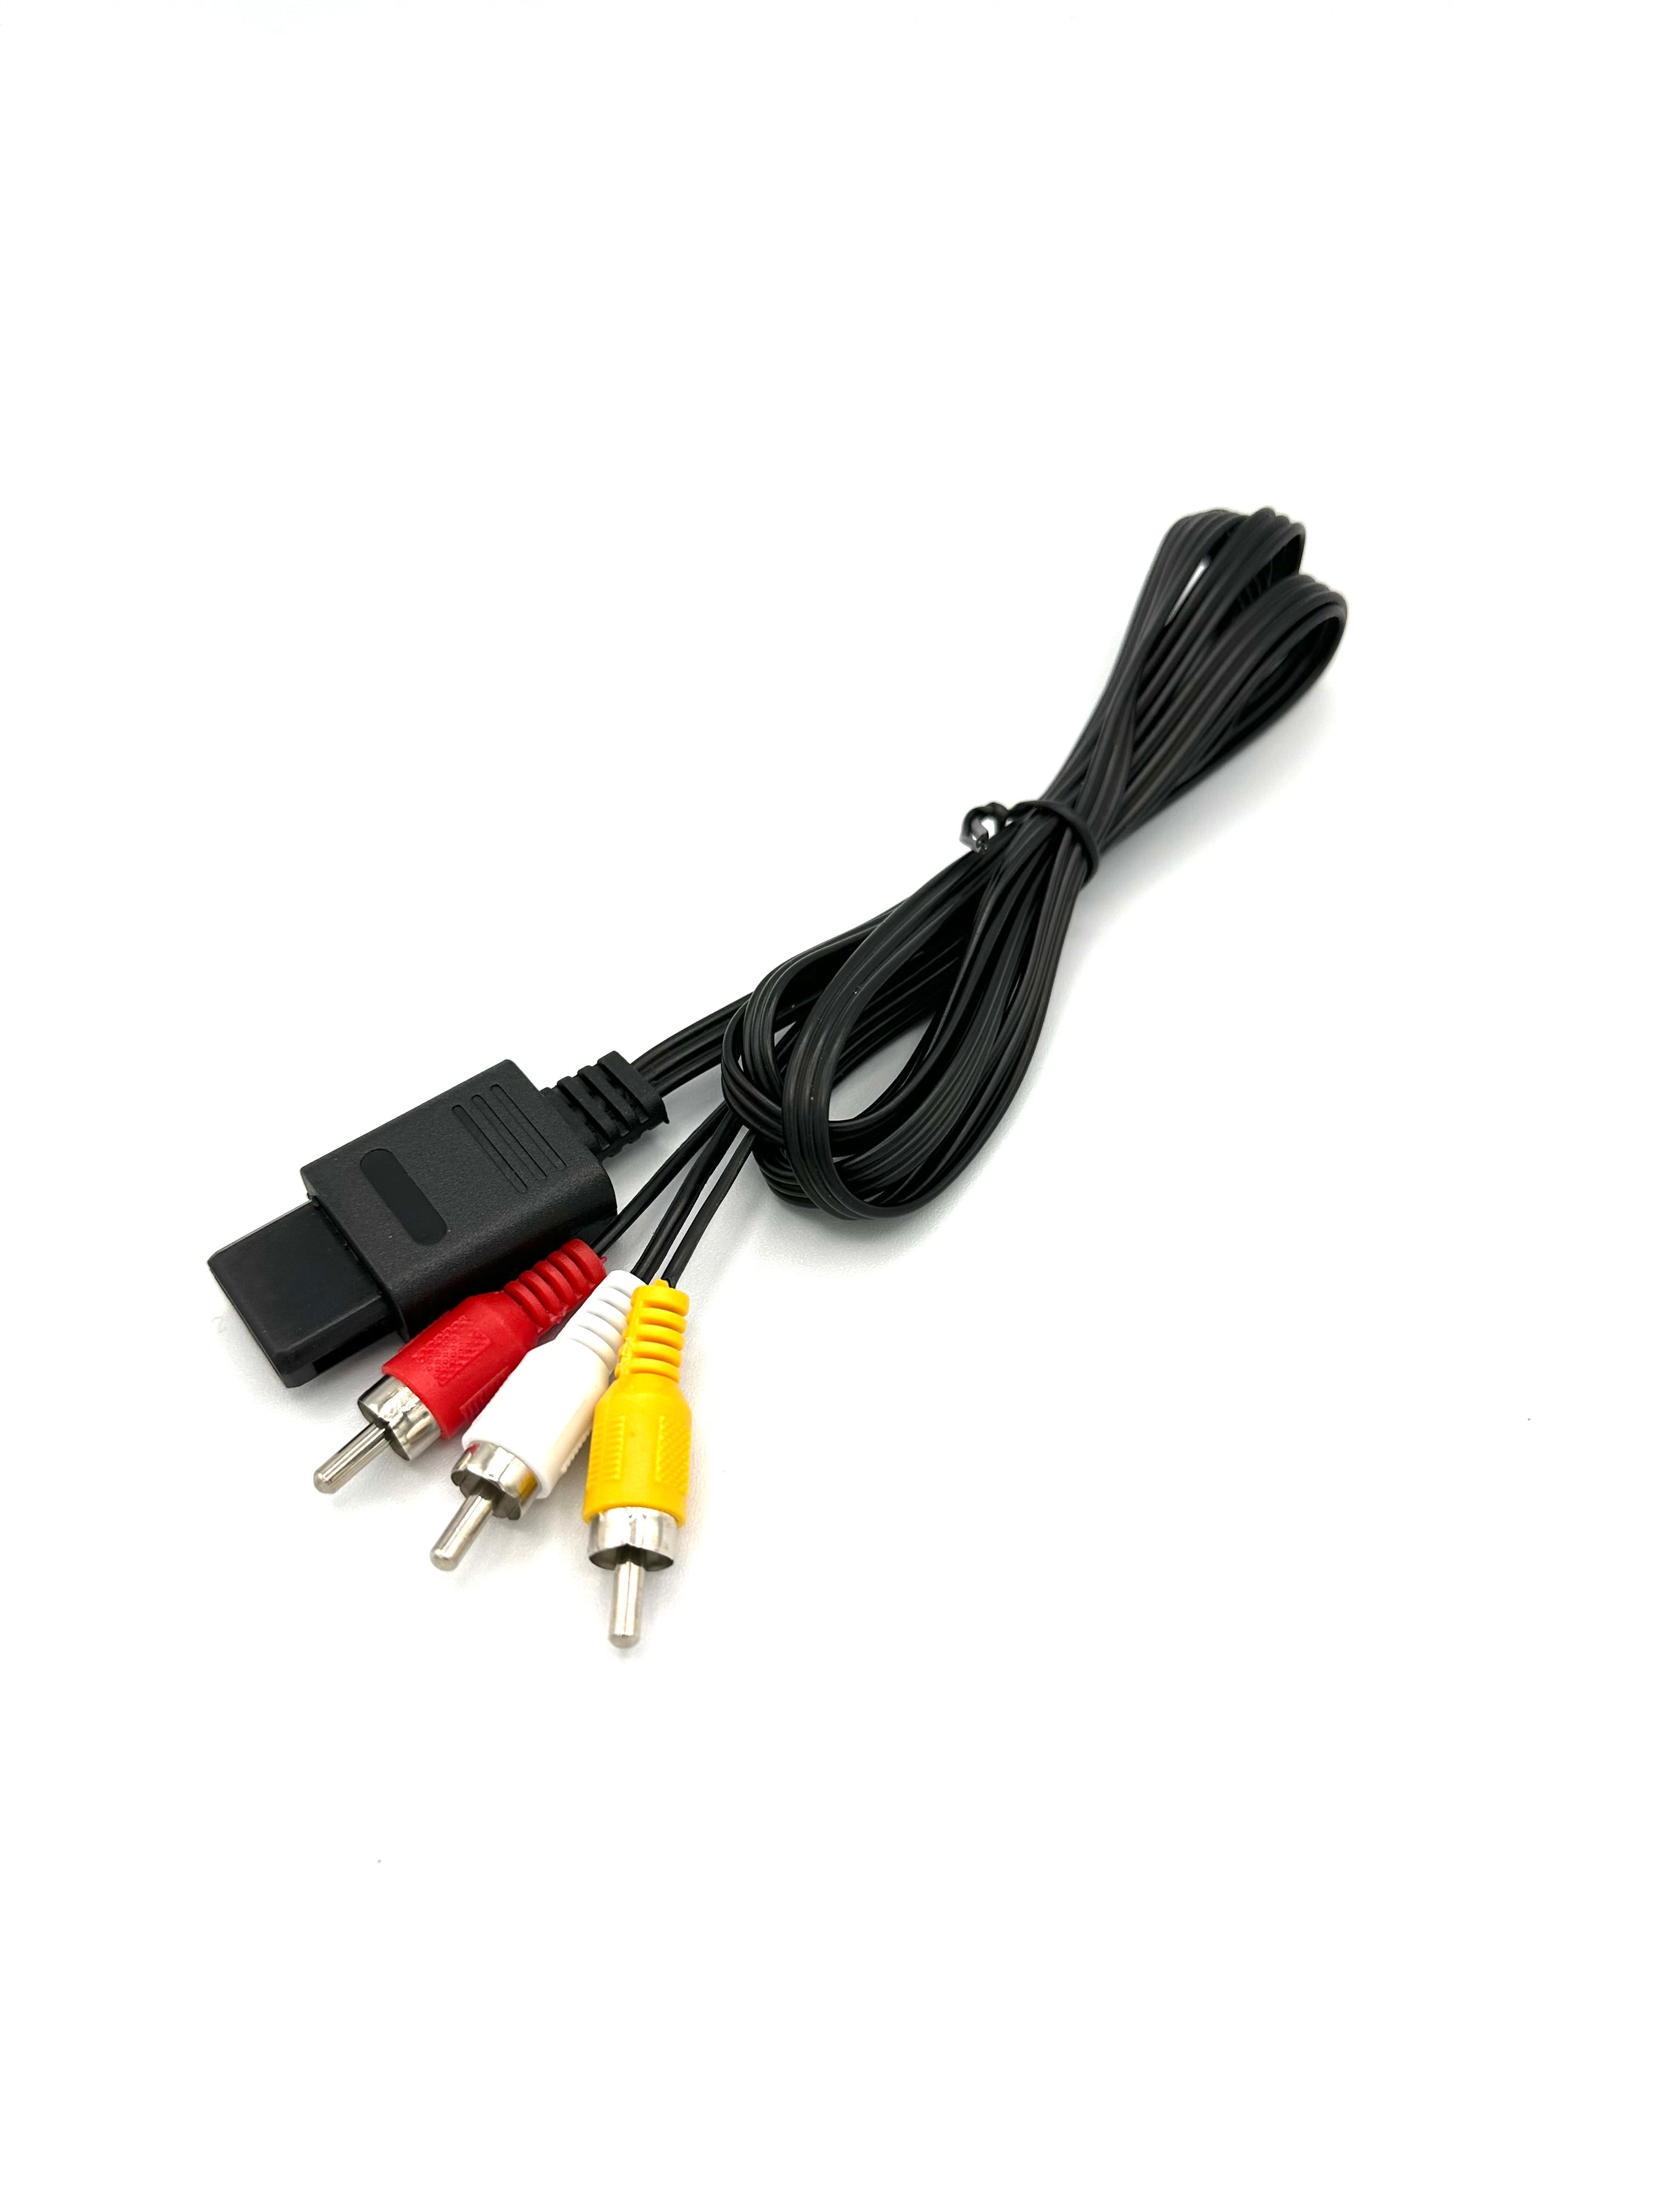 Nintendo 64 AV Cable Composite Audio Video